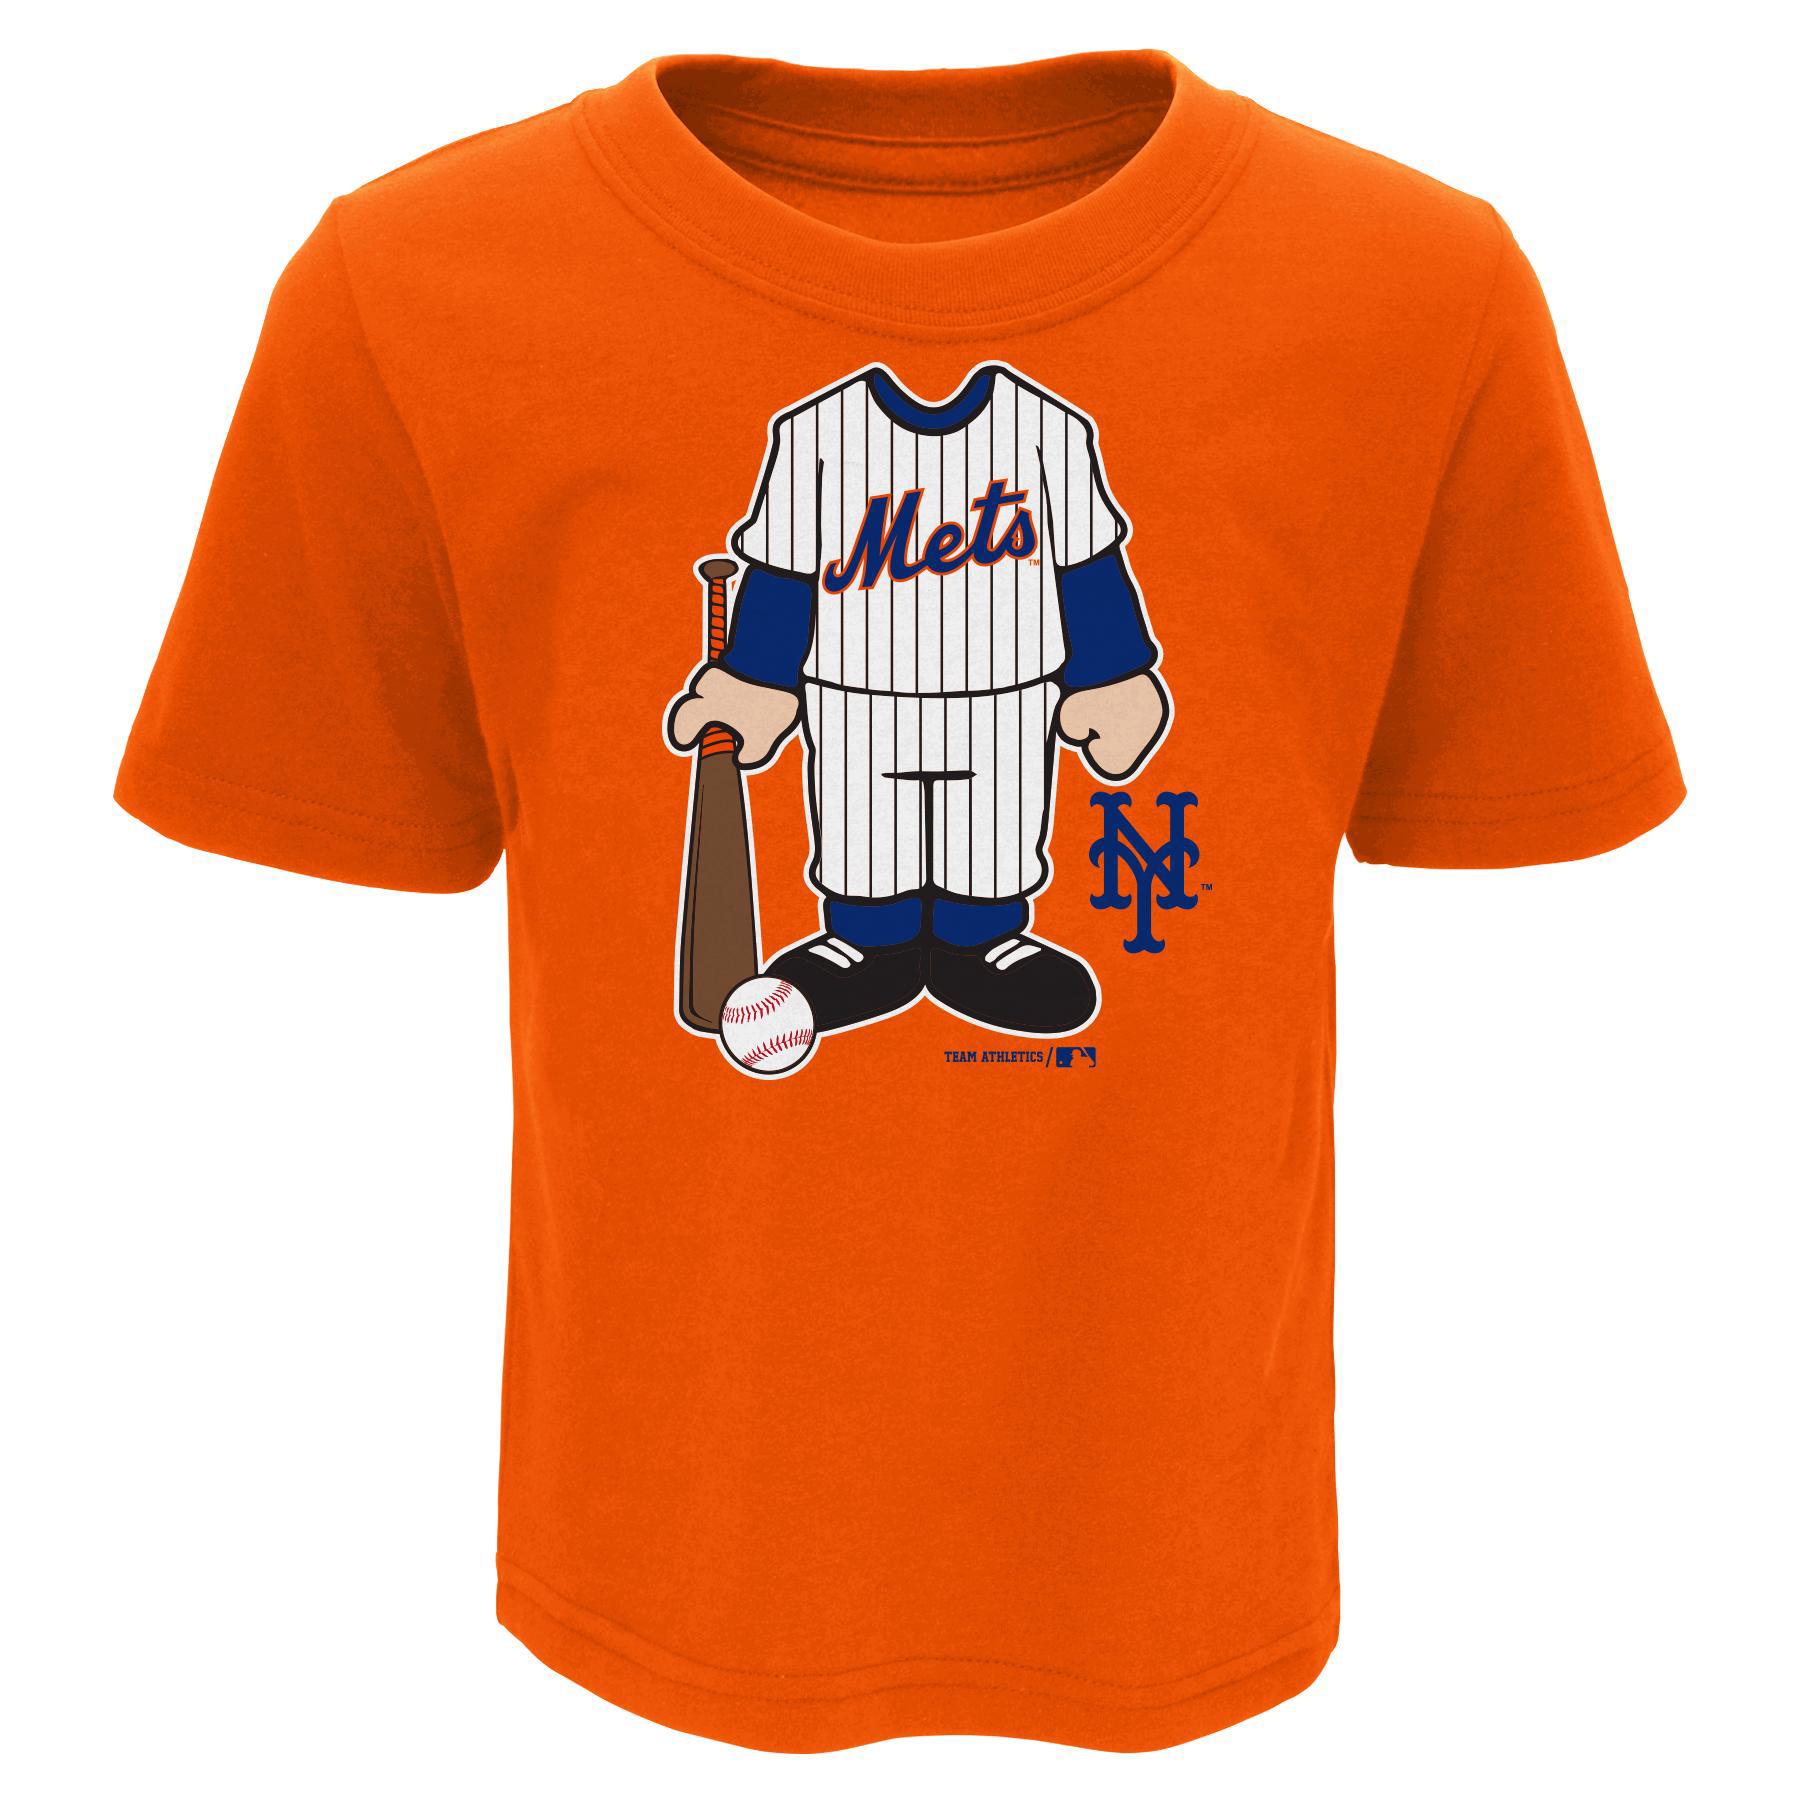 MLB Toddler Boys' T-Shirt - New York Mets